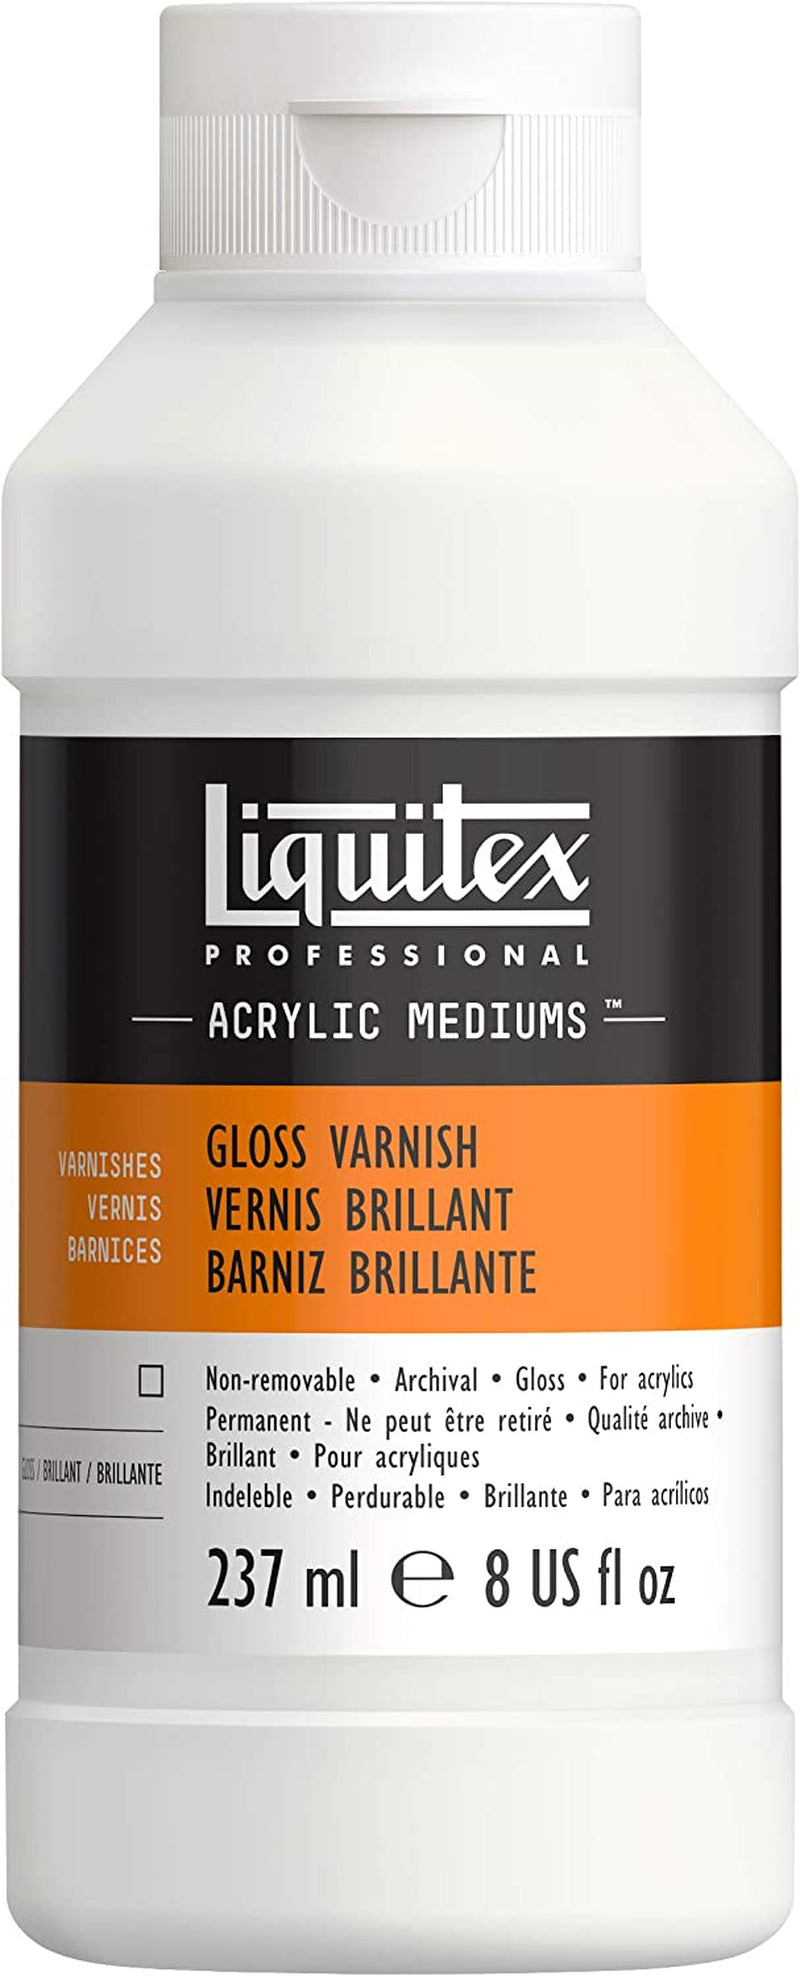 LIQUITEX, LIQUITEX Gloss Varnish 237 Ml, 6208